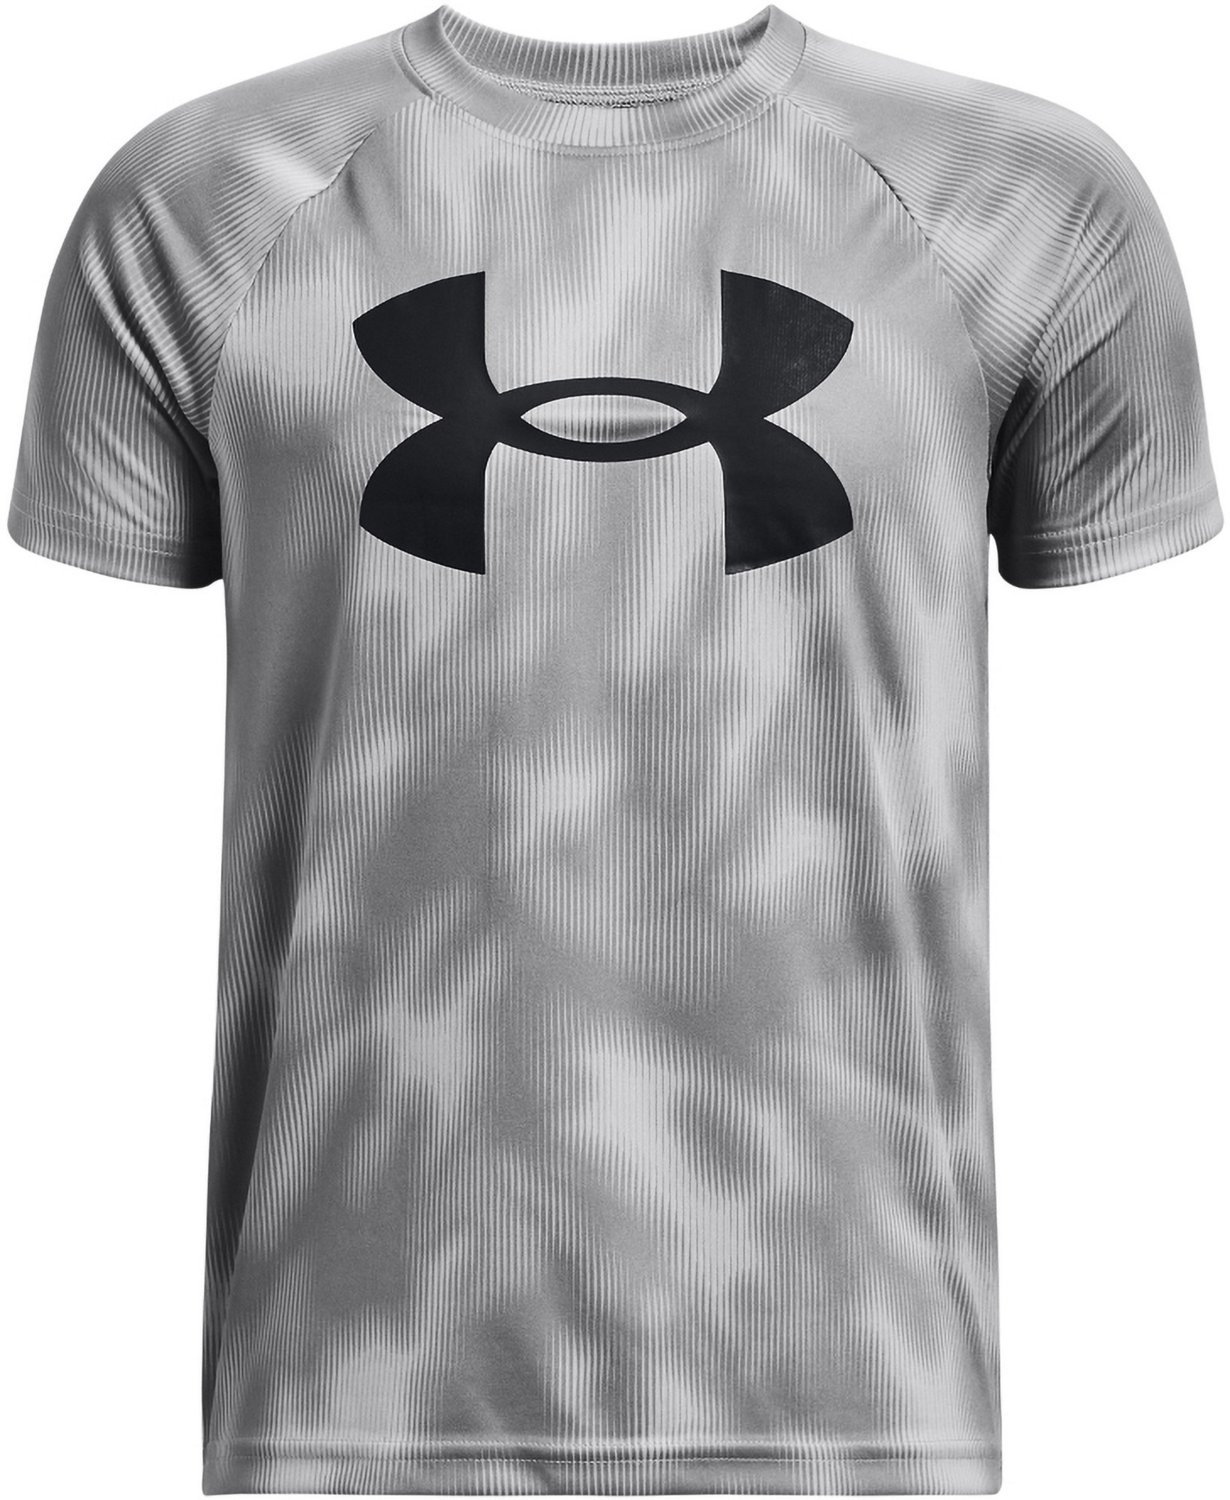 Under Armour Boys UA Tech Printed Short Sleeve T-shirt